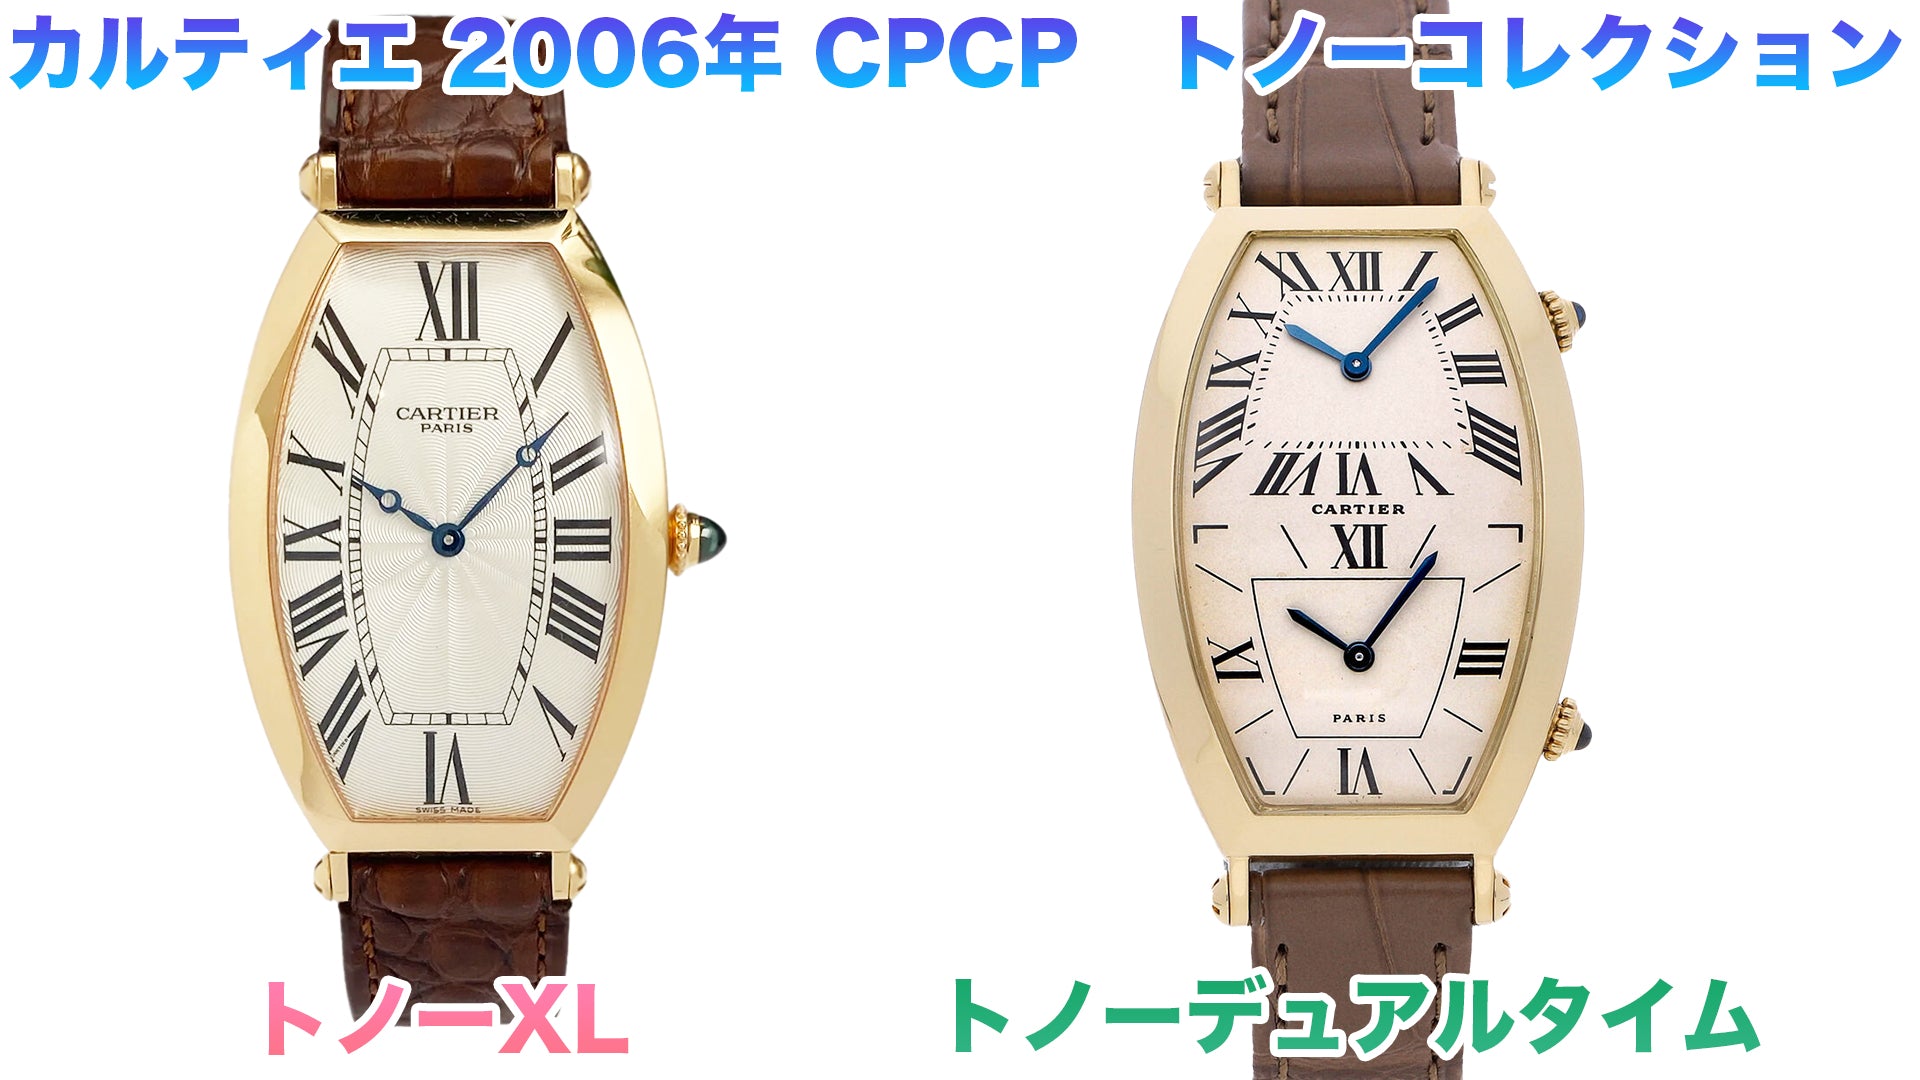 Cartier CPCP Collection 2006 Tonneau XL and Tonneau Dual Time